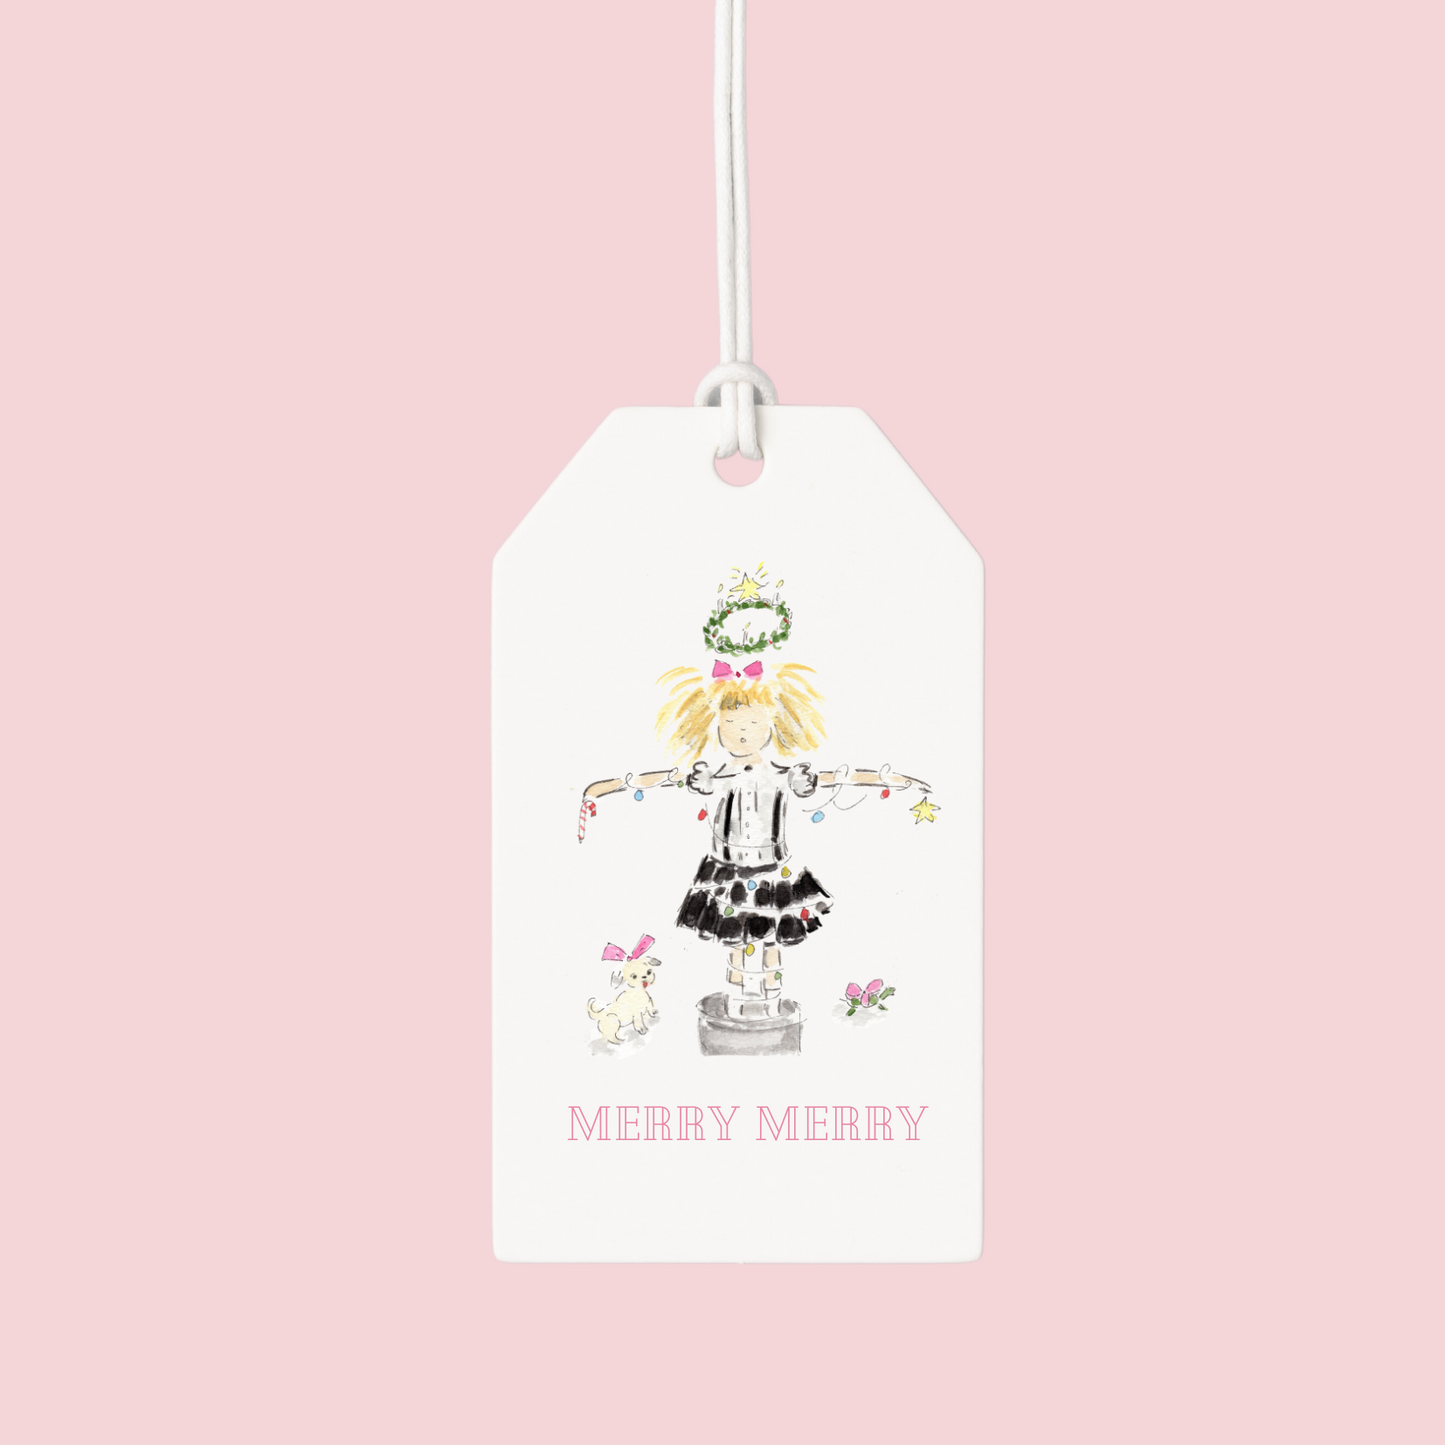 Custom Gift Tags: Merry Merry